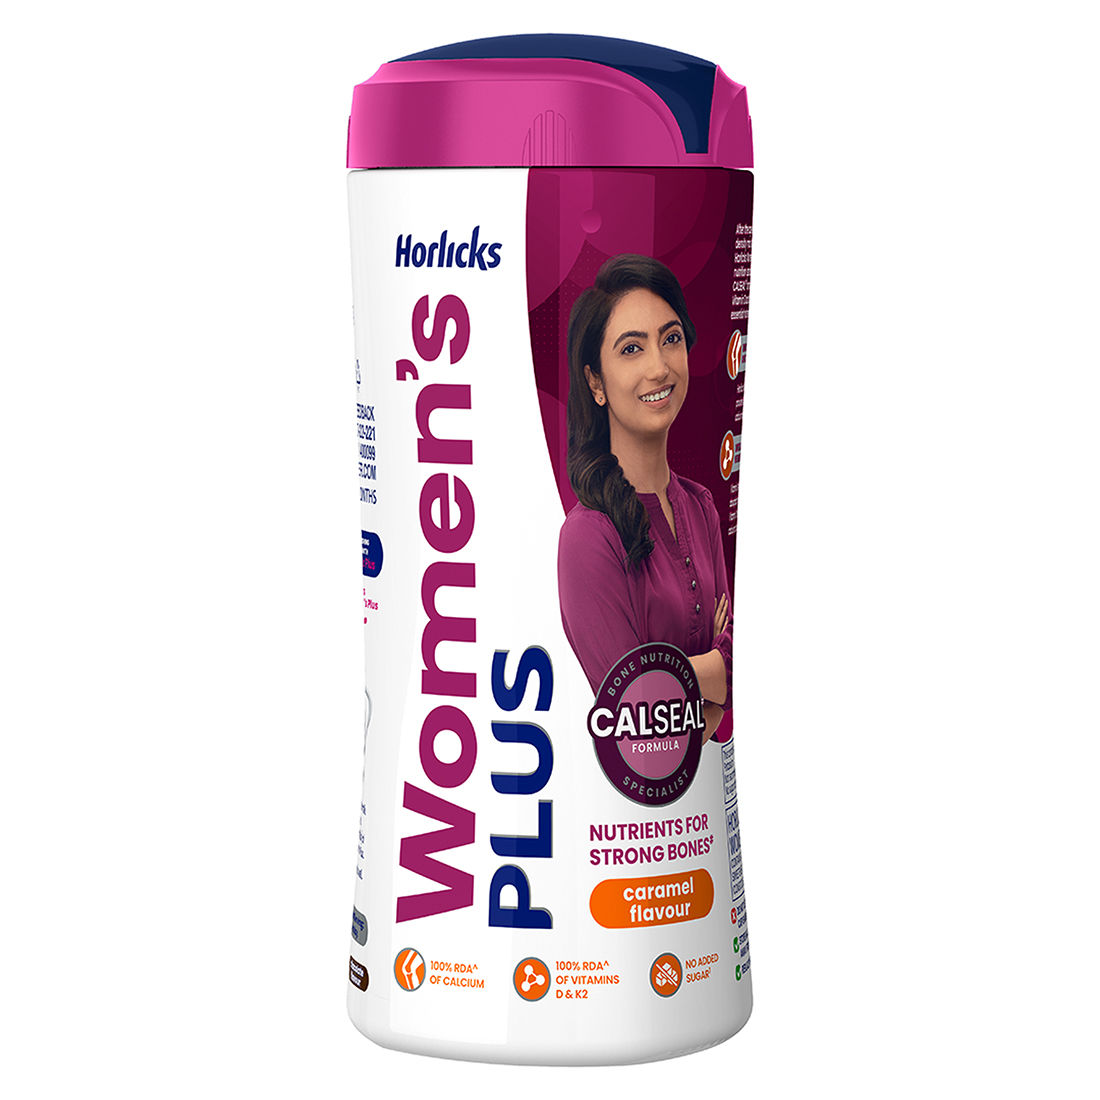 Horlicks Women's Plus Caramel Flavour Nutrition Drink Powder, 400 gm Jar, Pack of 1 